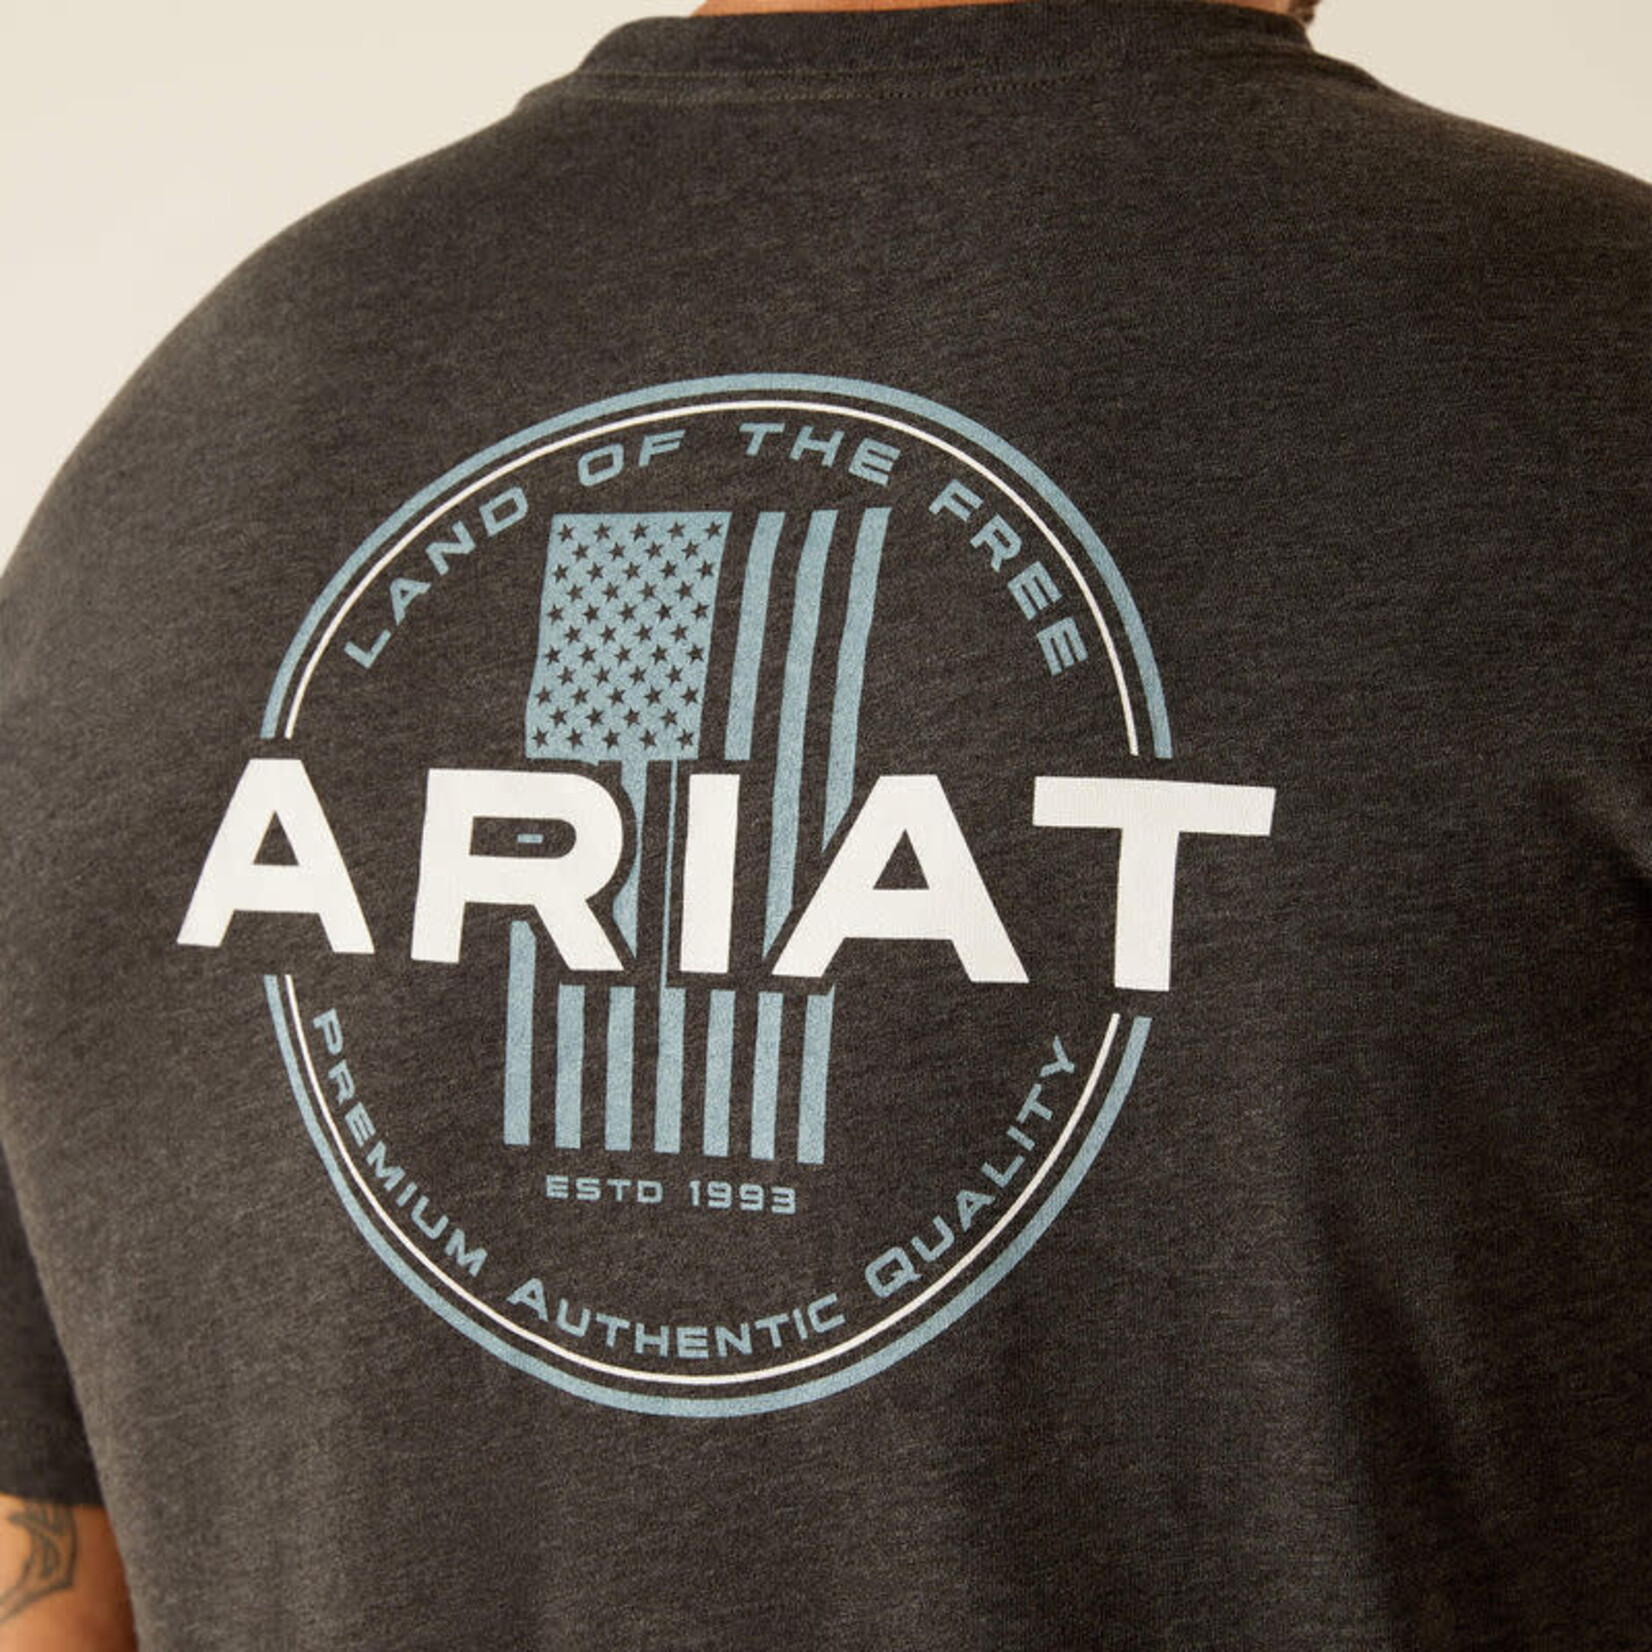 Ariat Ariat 10051761 Men's Ariat Roundabout T- Shirt Charcoal Heather